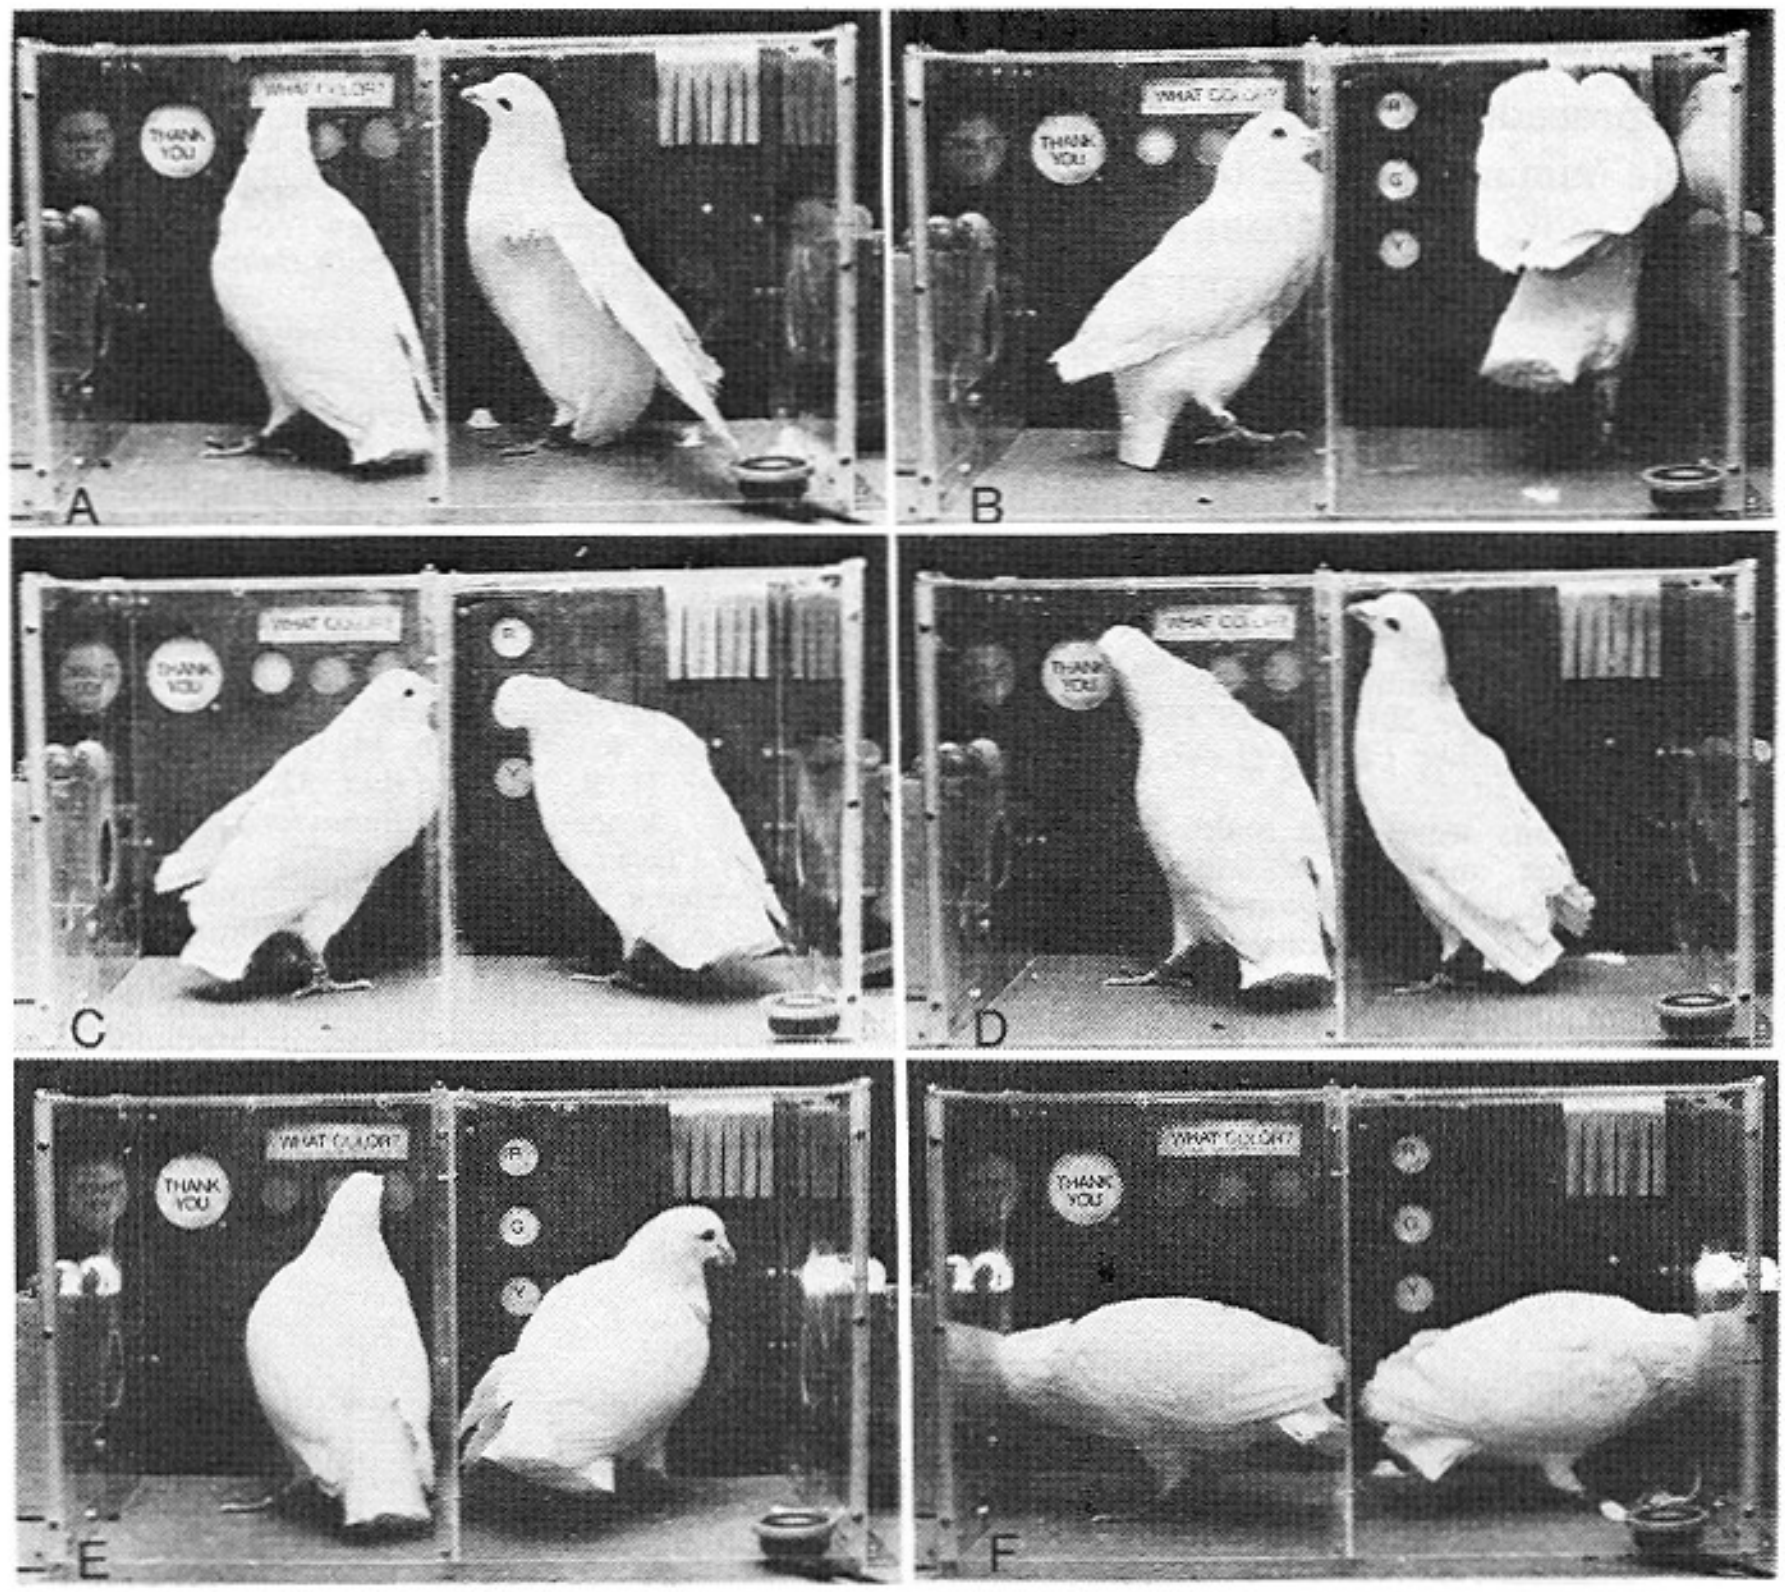 Image via 1980 publication Symbolic Communication Between Two Pigeons (Columba livia domestica), by Robert Epstein, Robert P. Lanze, and B. F. Skinner